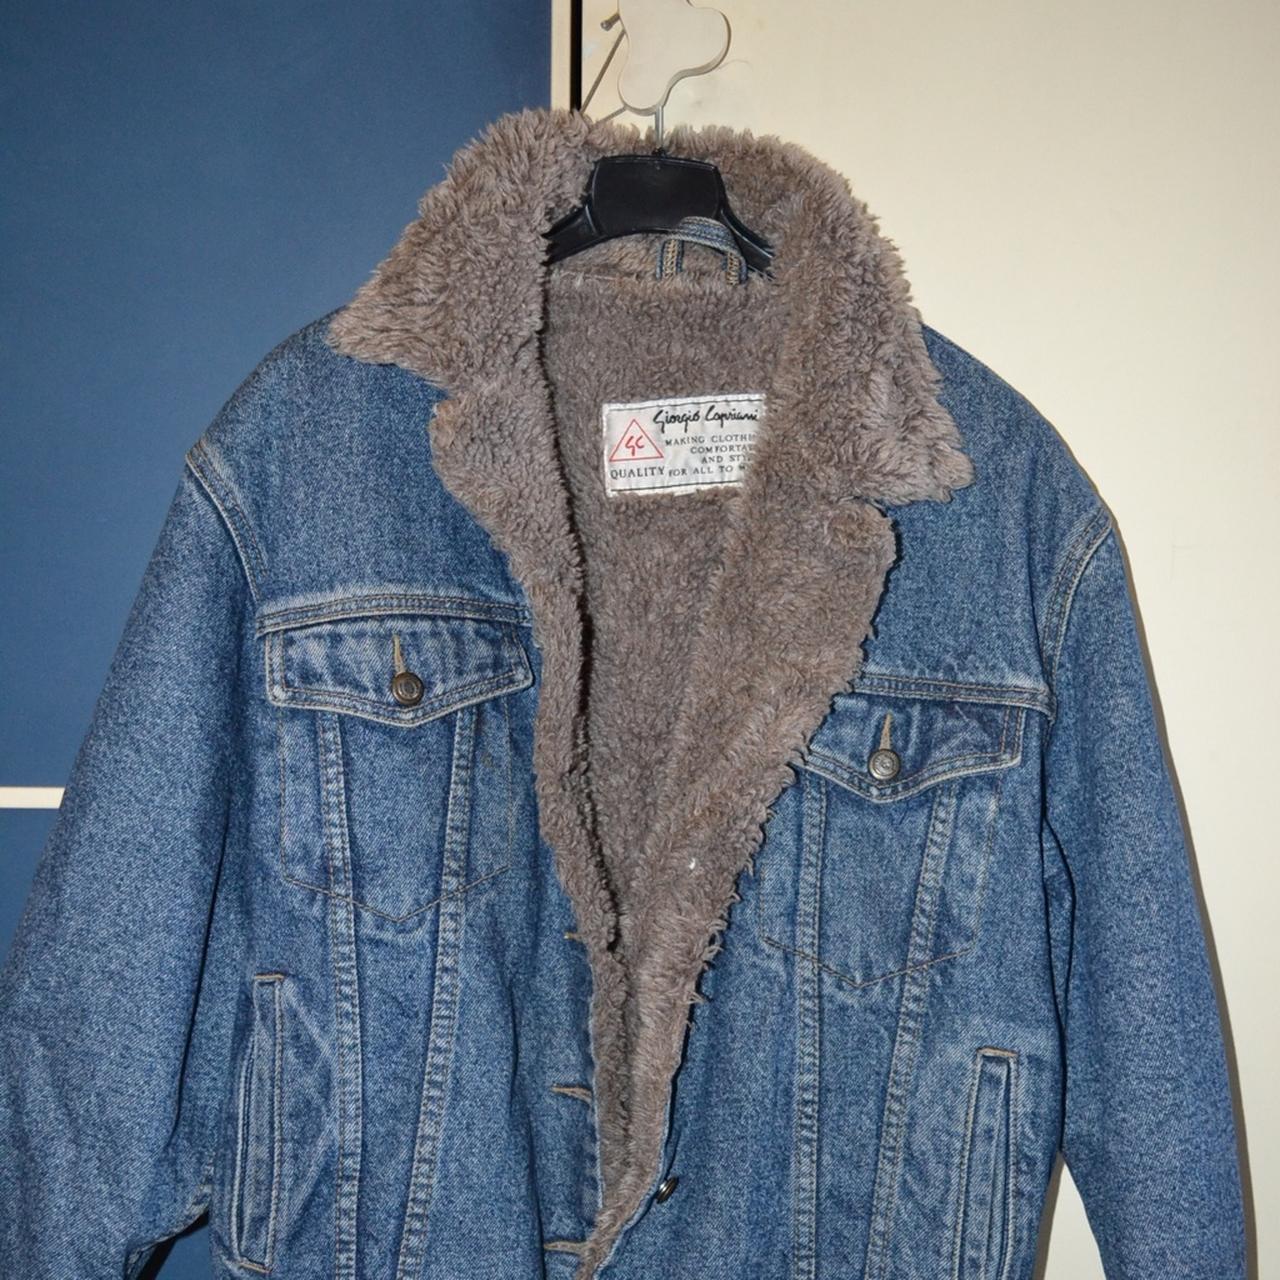 Giorgio Capriani jeans jacket, giacca vintage 100%... - Depop